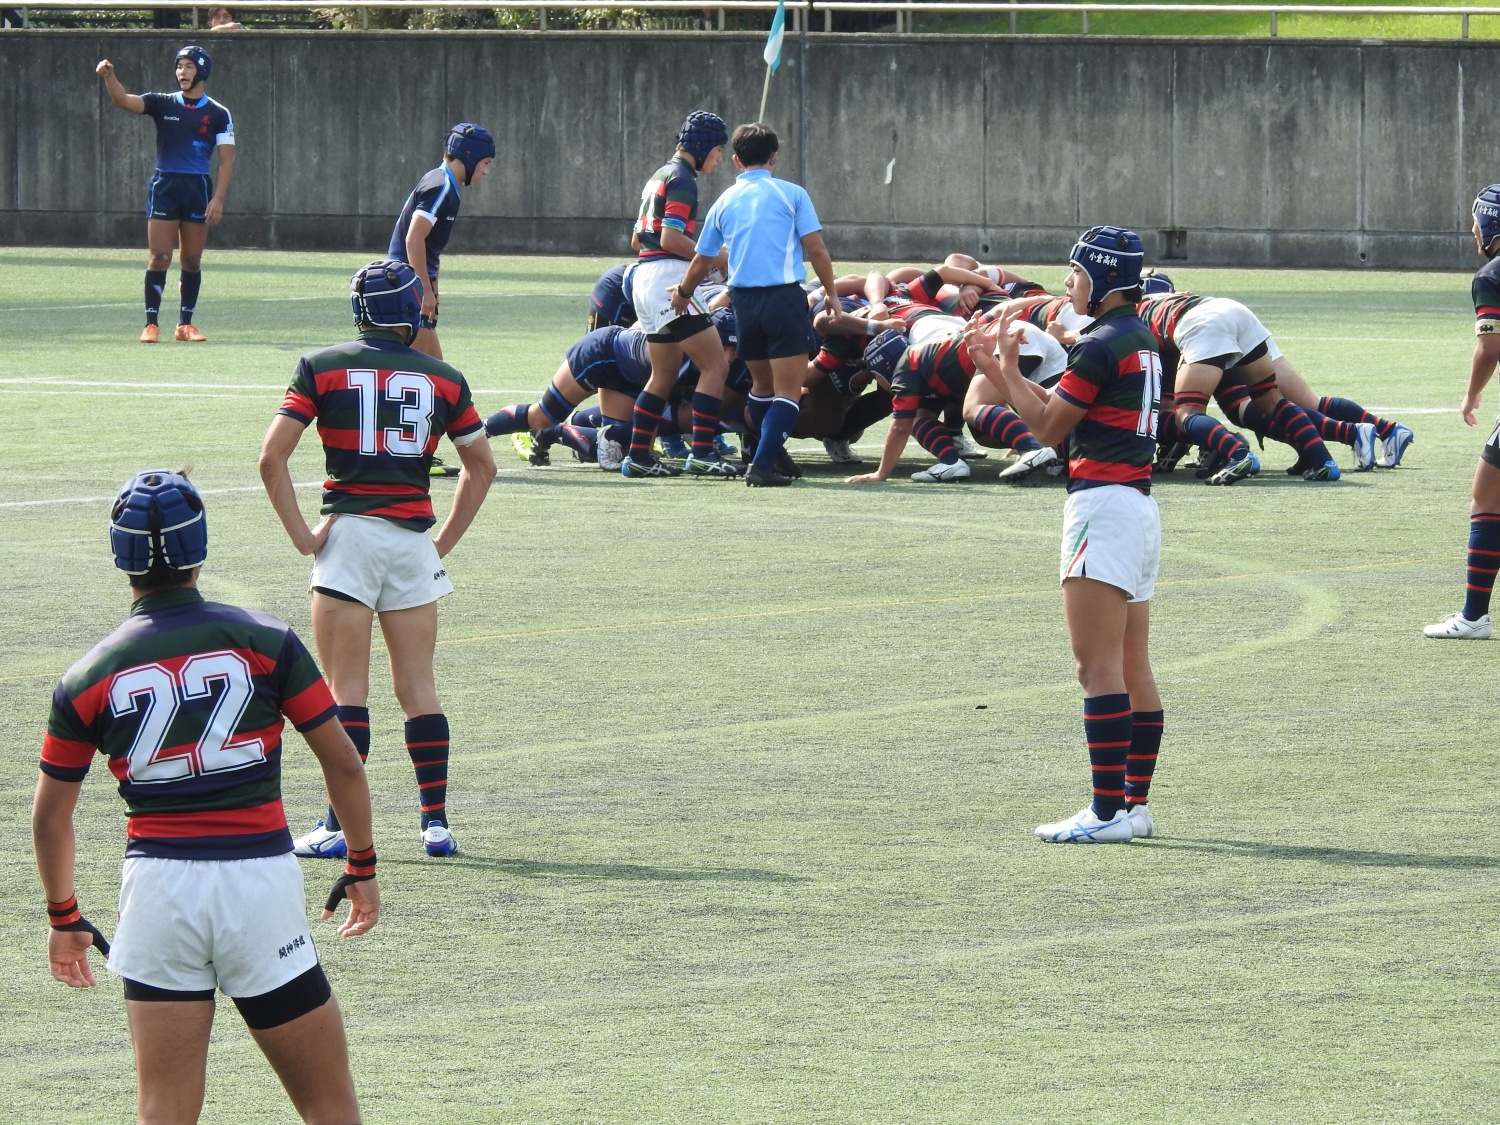 http://kokura-rugby.sakura.ne.jp/DSCN8318_xlarge.JPG